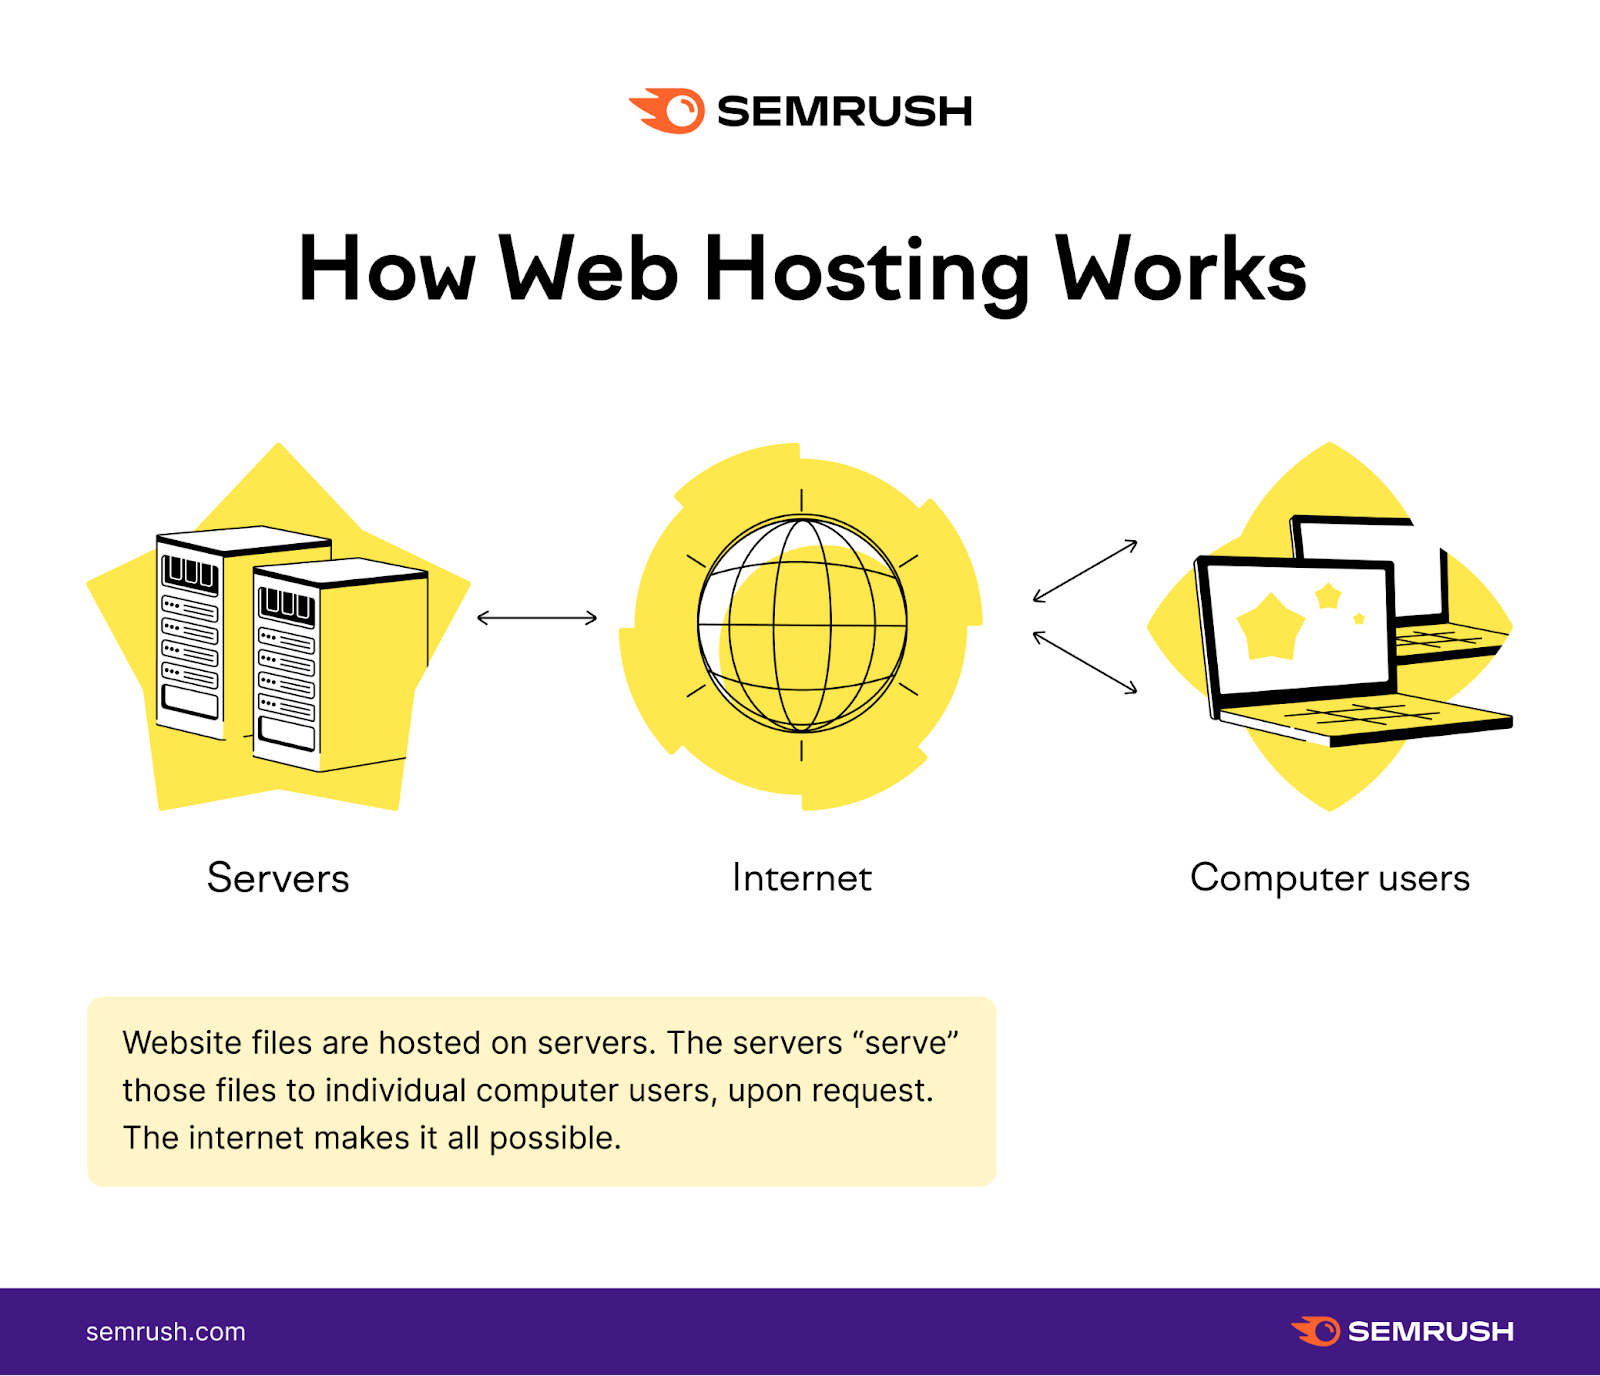 an image illustrating how web hosting works by Semrush